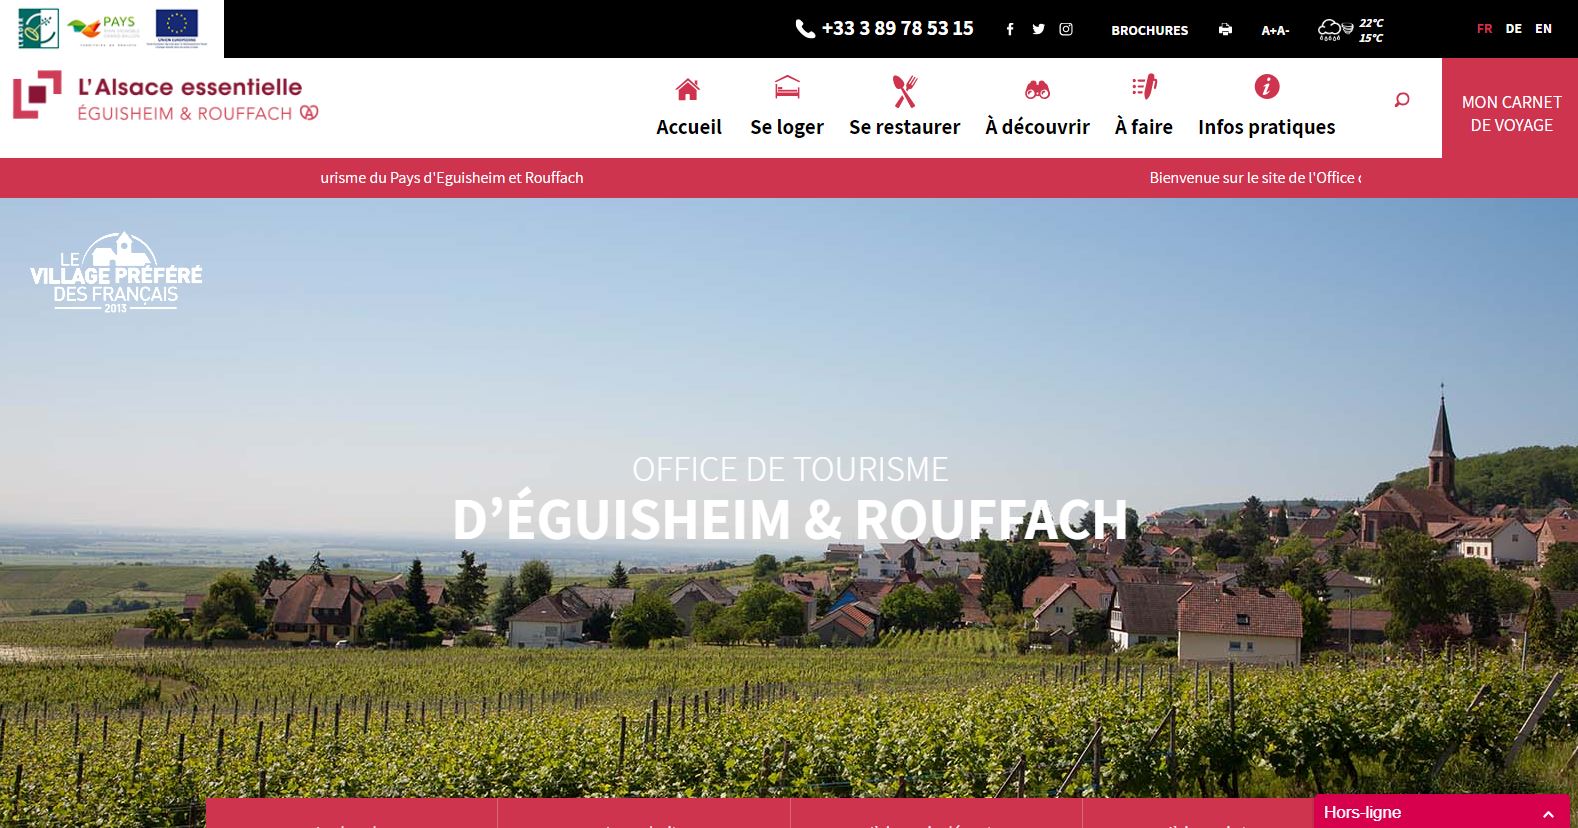 (c) Tourisme-eguisheim-rouffach.com